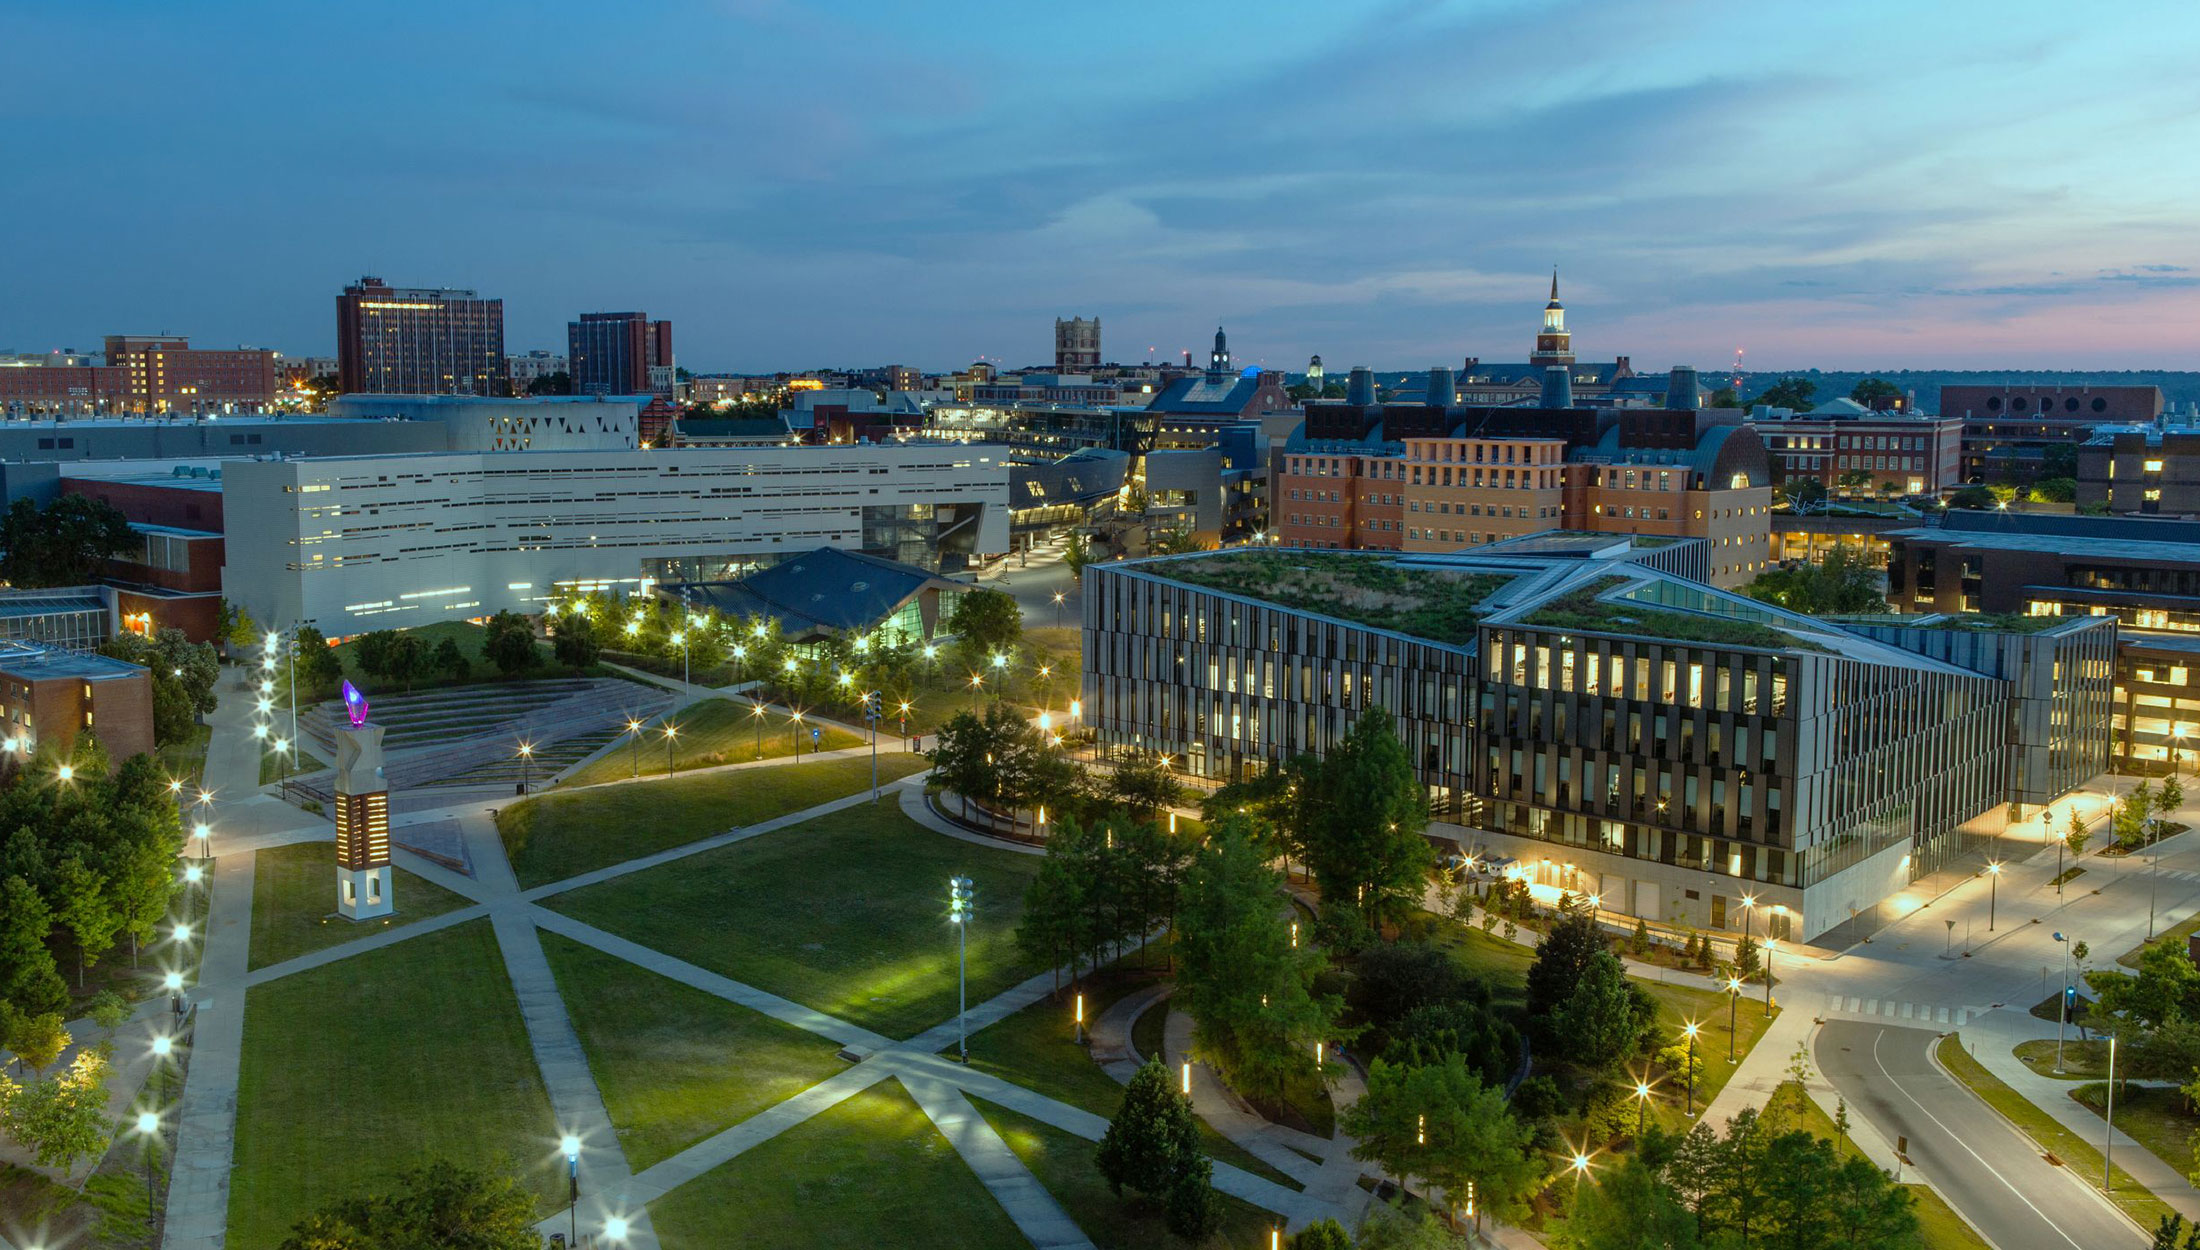 Aerial view of the University of Cincinnati campus at dusk